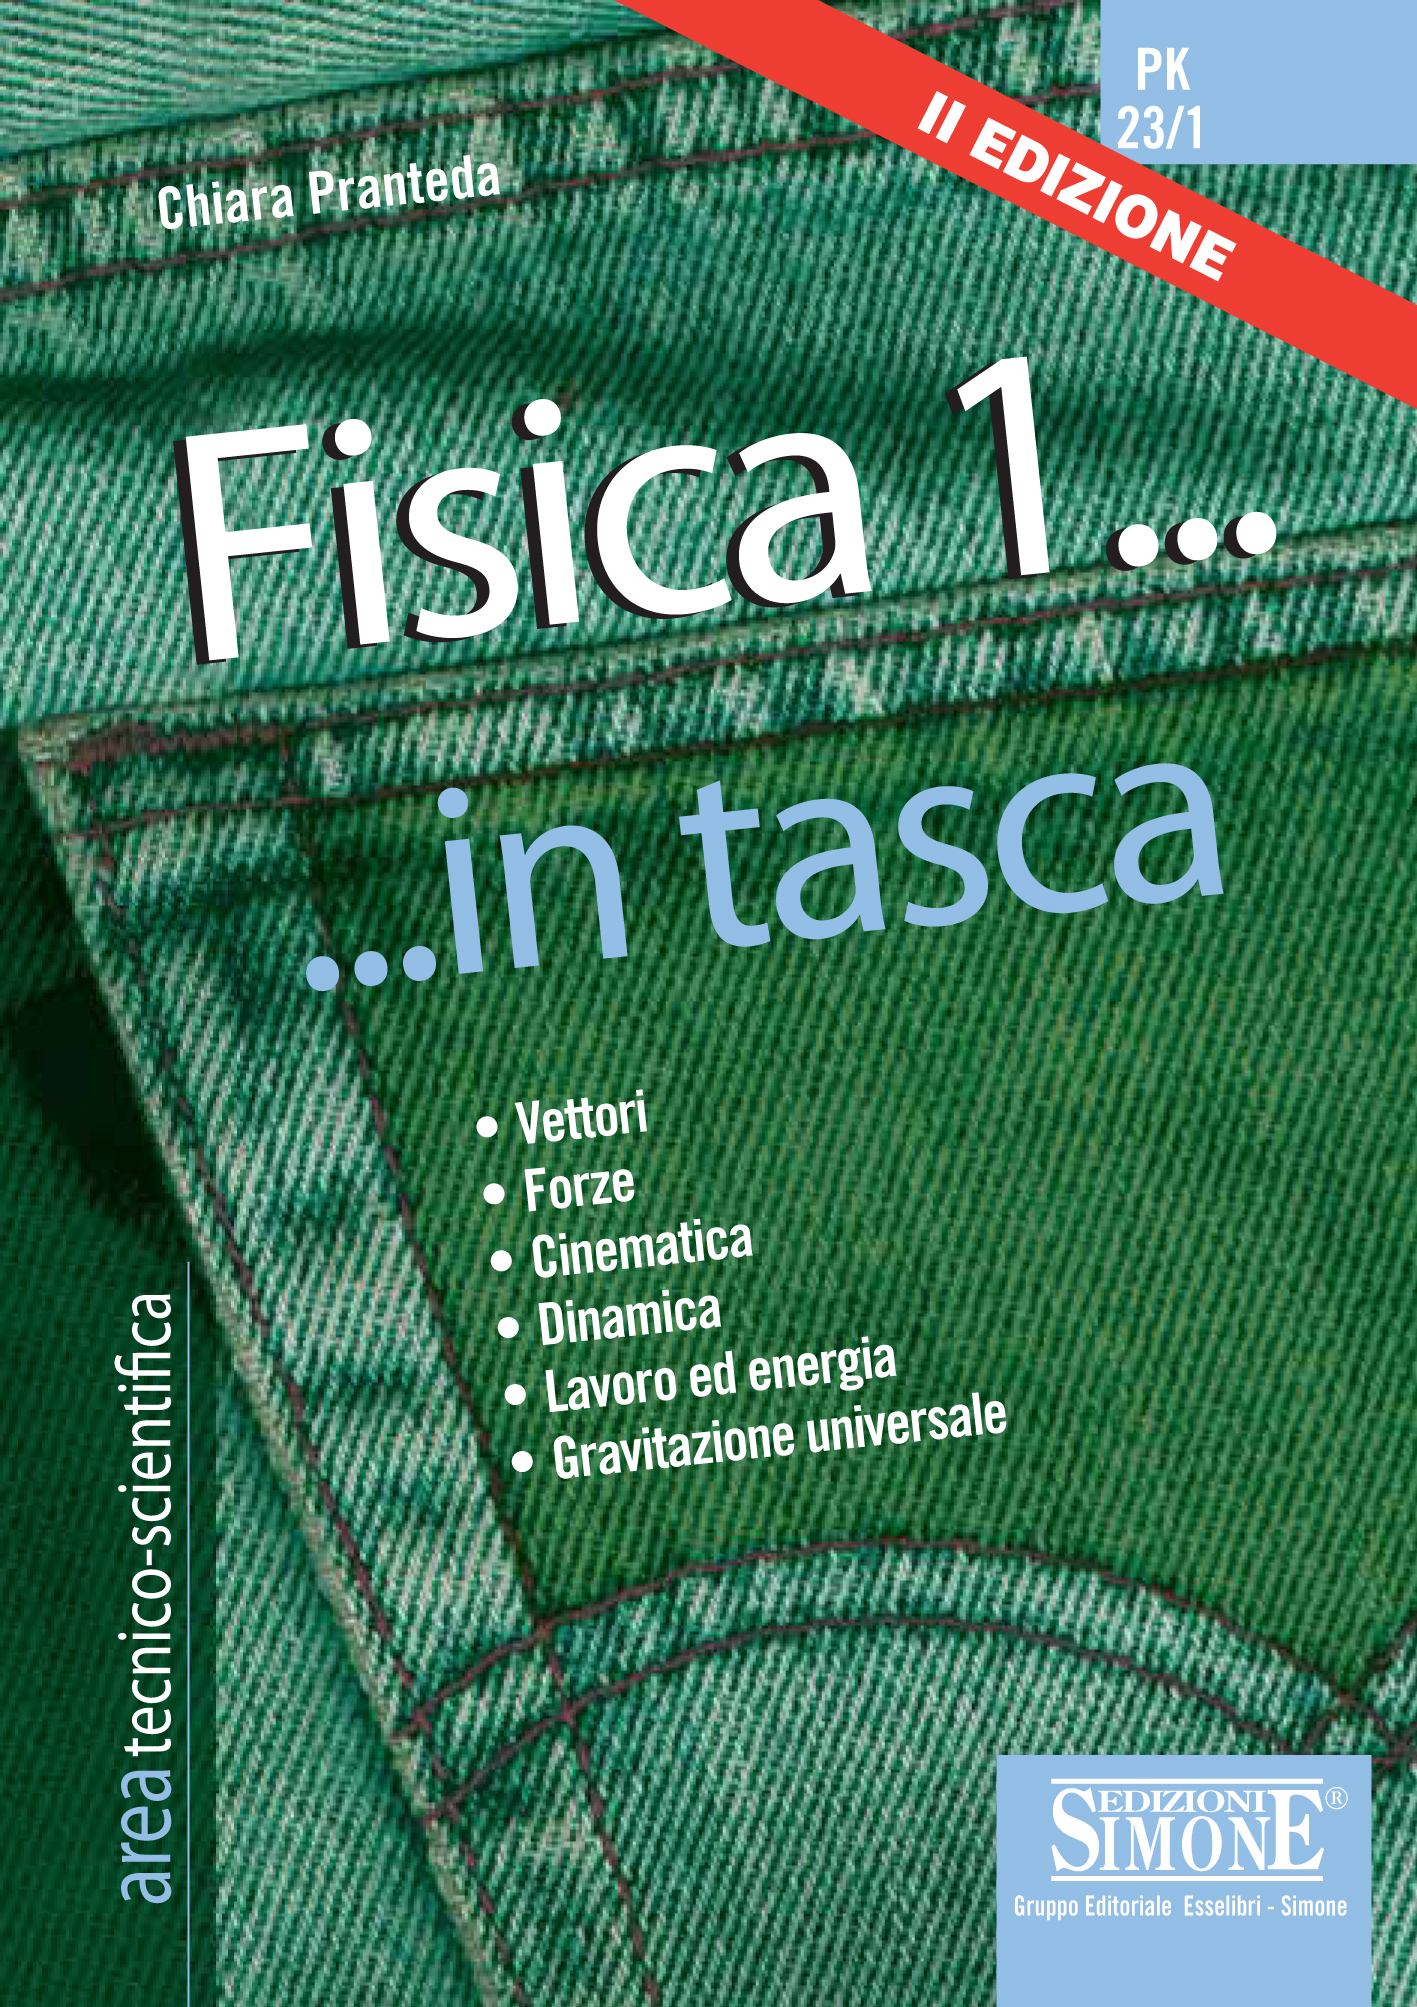 Ebook] Fisica 1 in tasca - Nozioni essenziali - Edizioni Simone